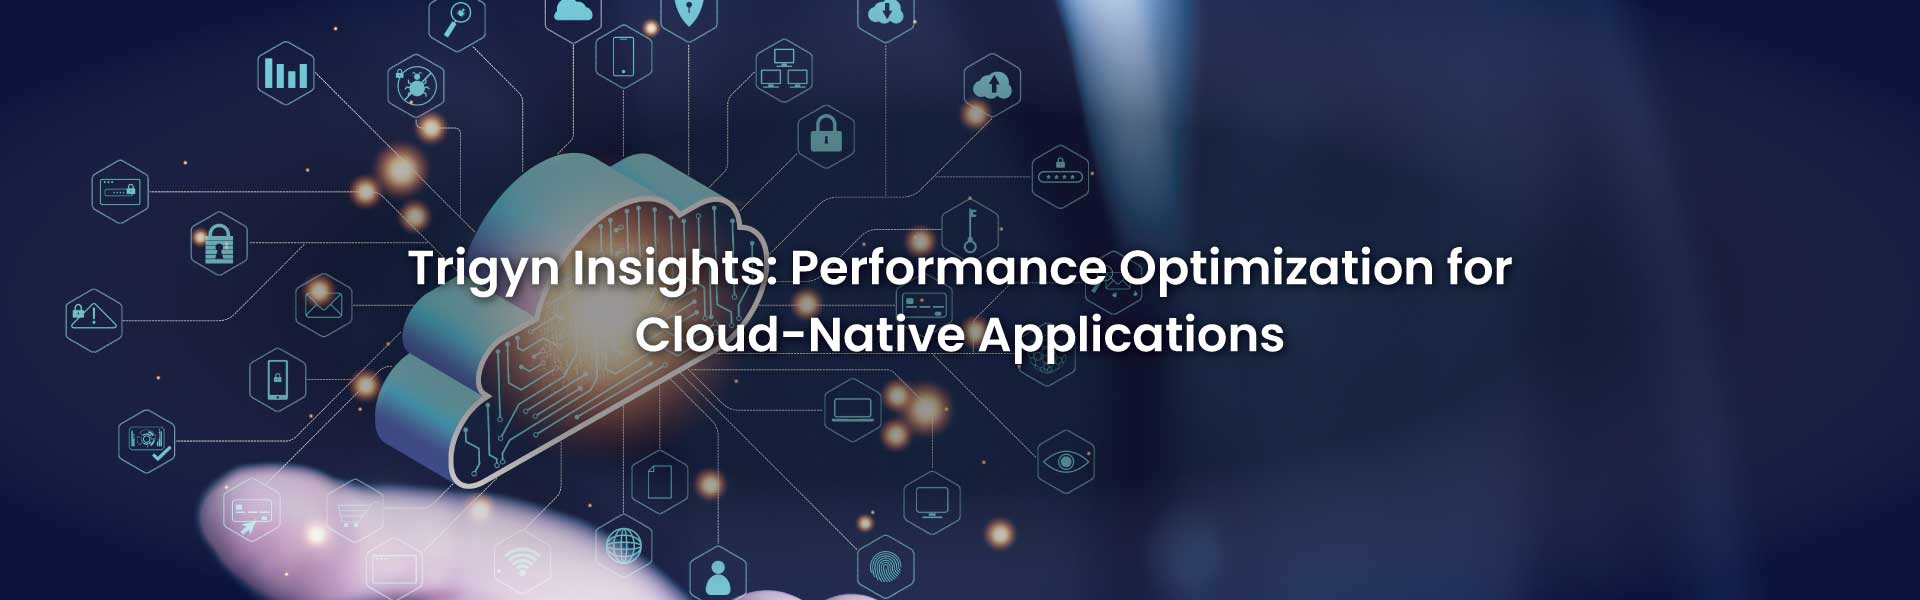 Optimization for Cloud-Native Applications